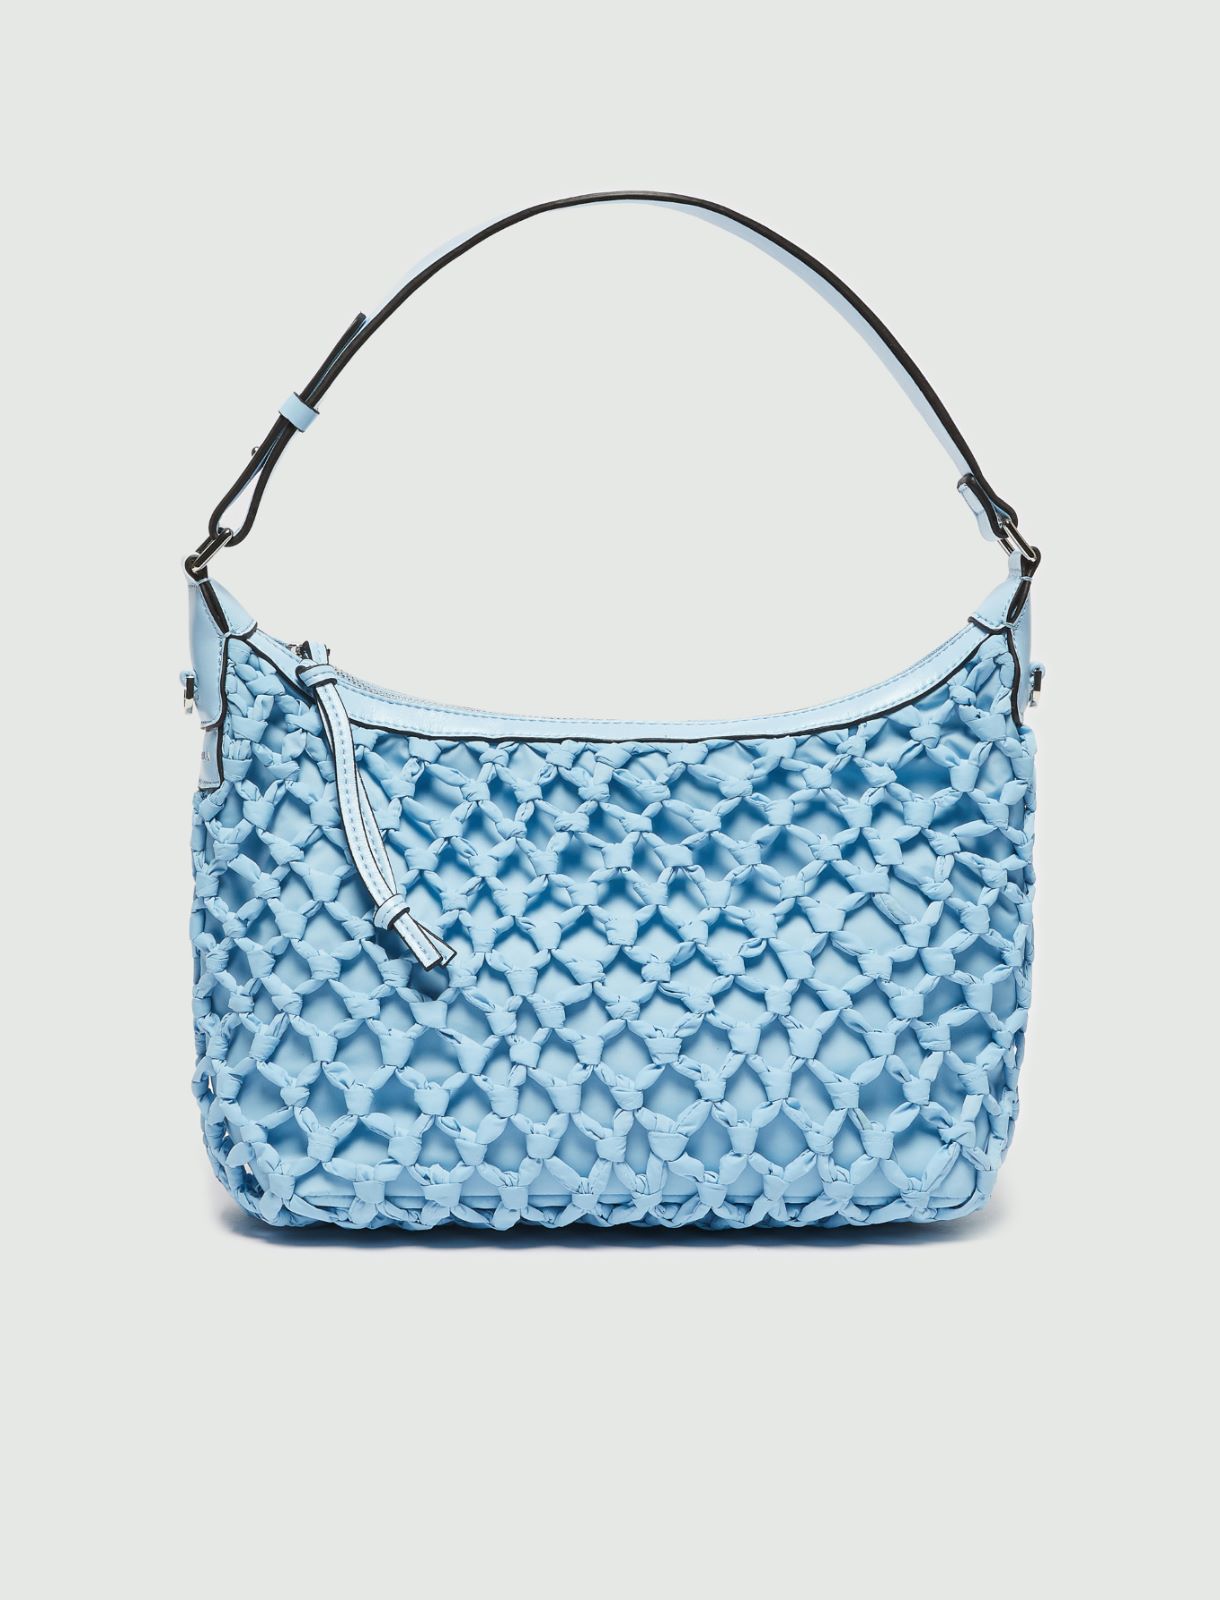 Woven bag - Light blue - Marella